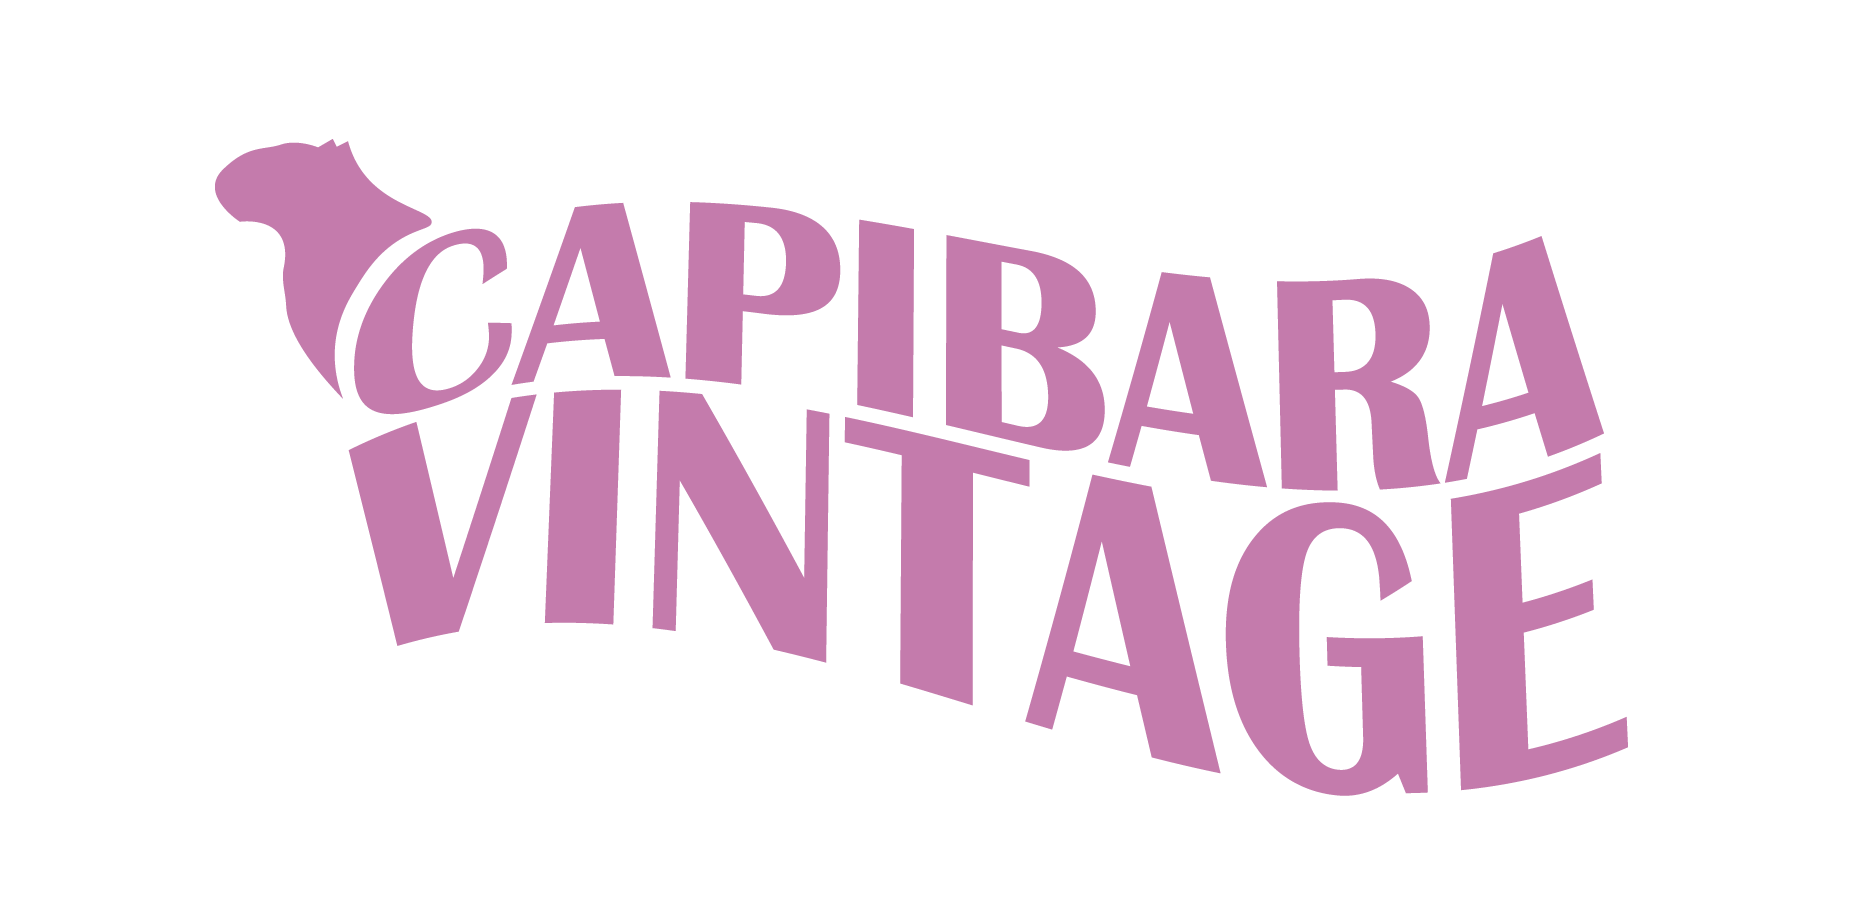 Capibara Vintage